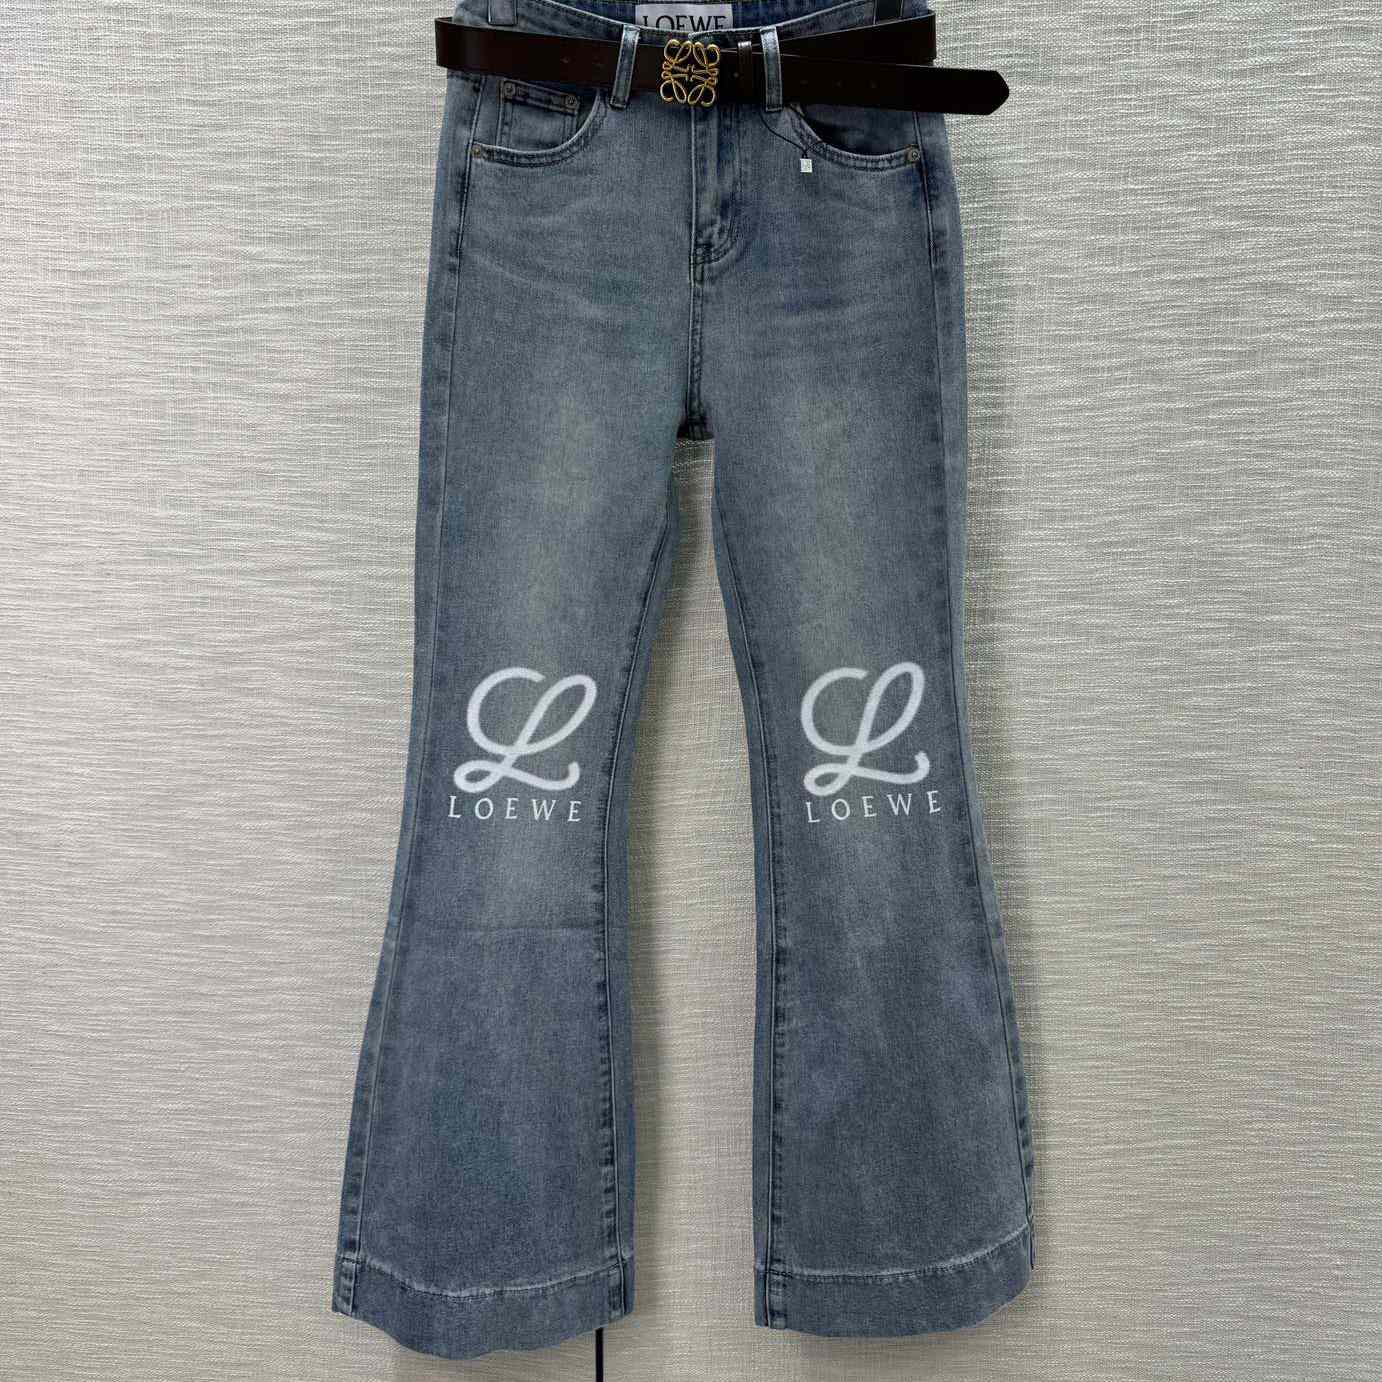 Loewe Jeans - PerfectKickZ